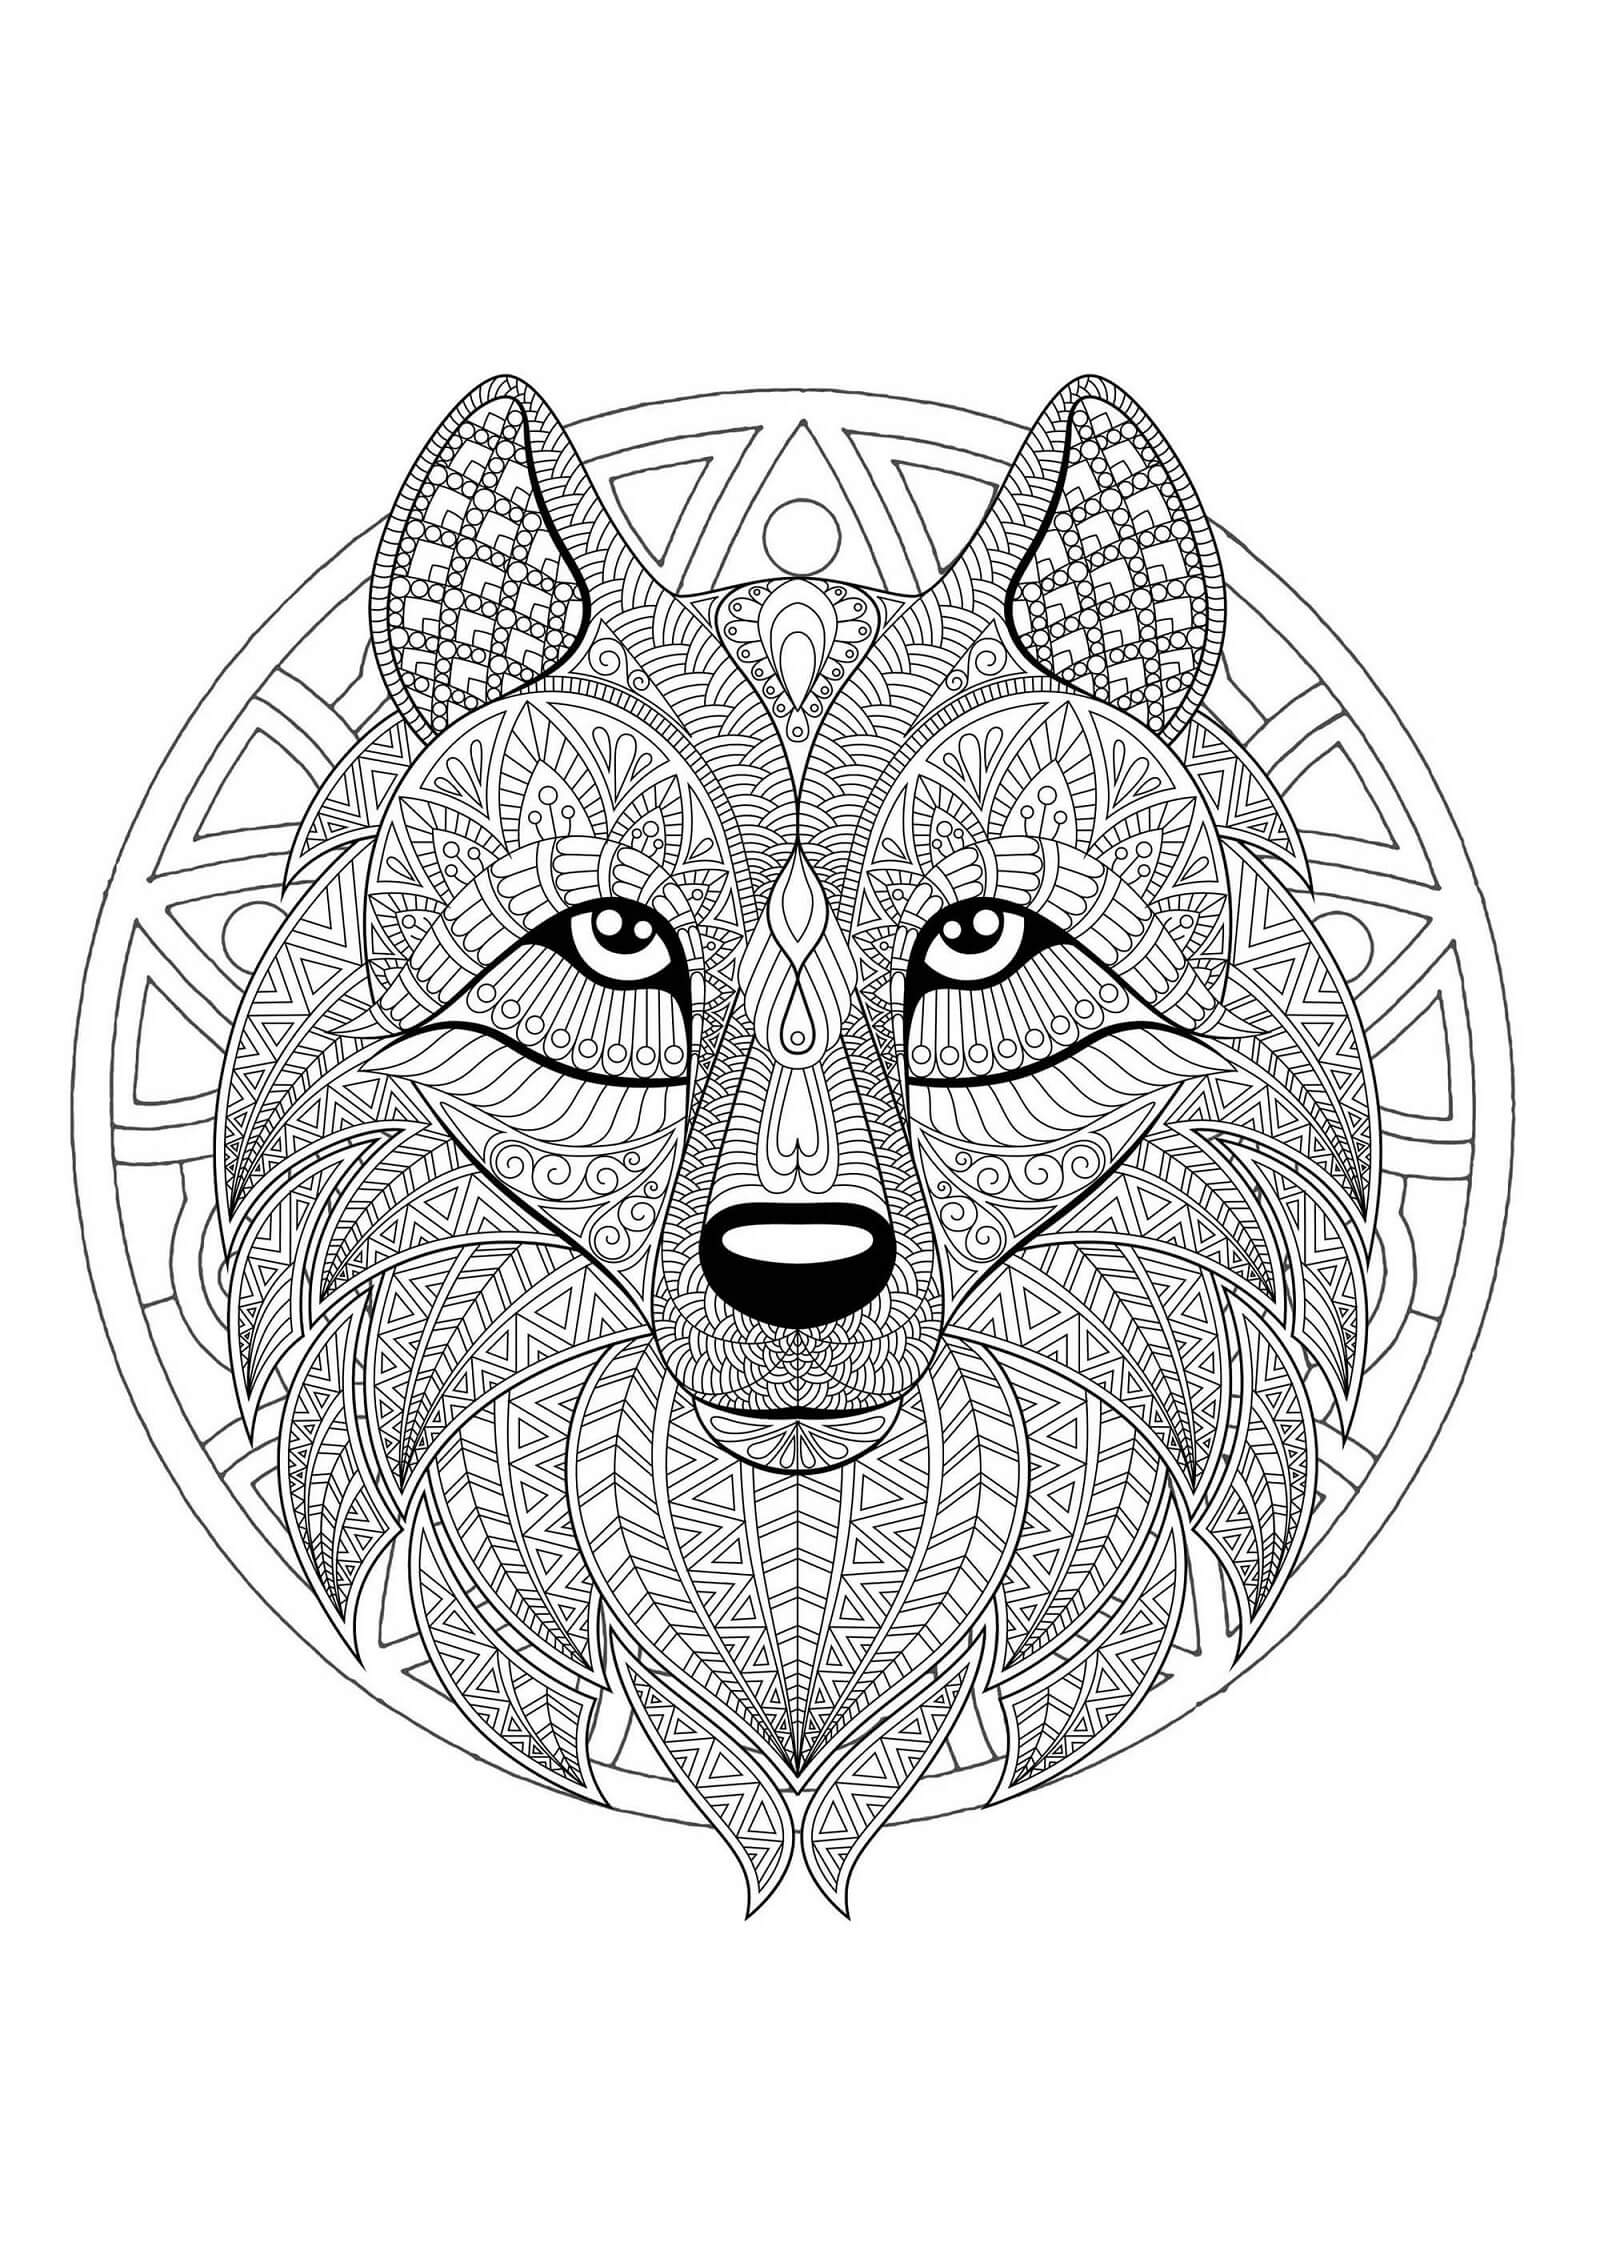 Mandala Wolf Coloring Page - Sheet 4 Mandalas